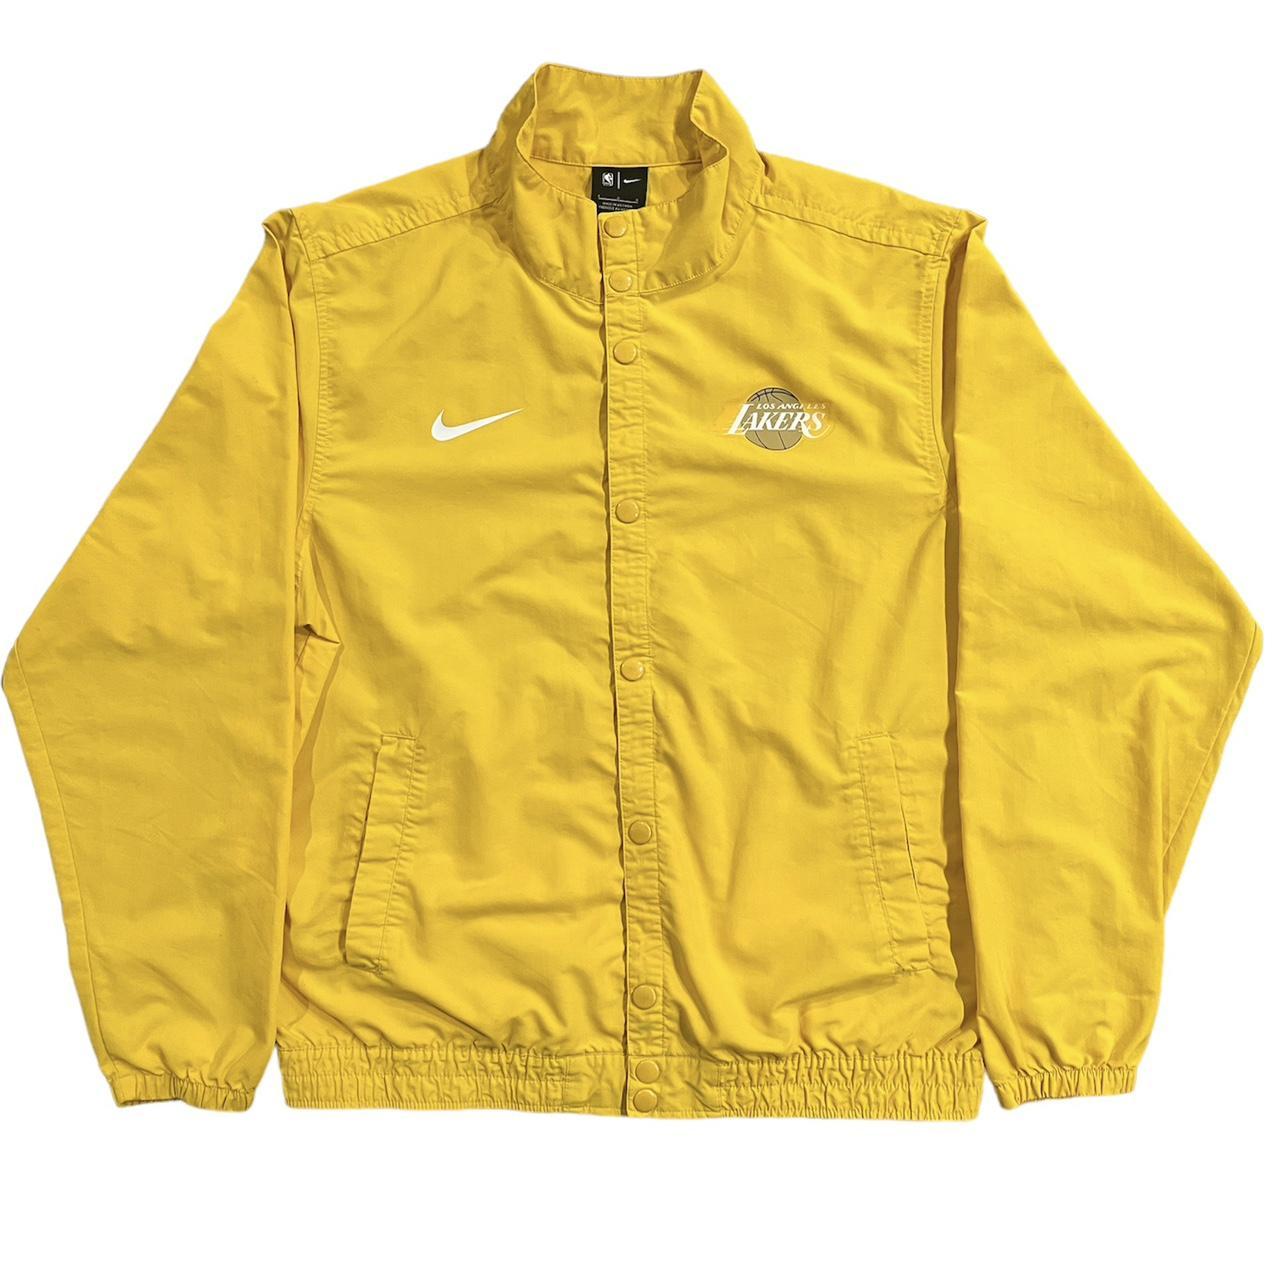 Nike Men's Lightweight Jacket - Yellow - L